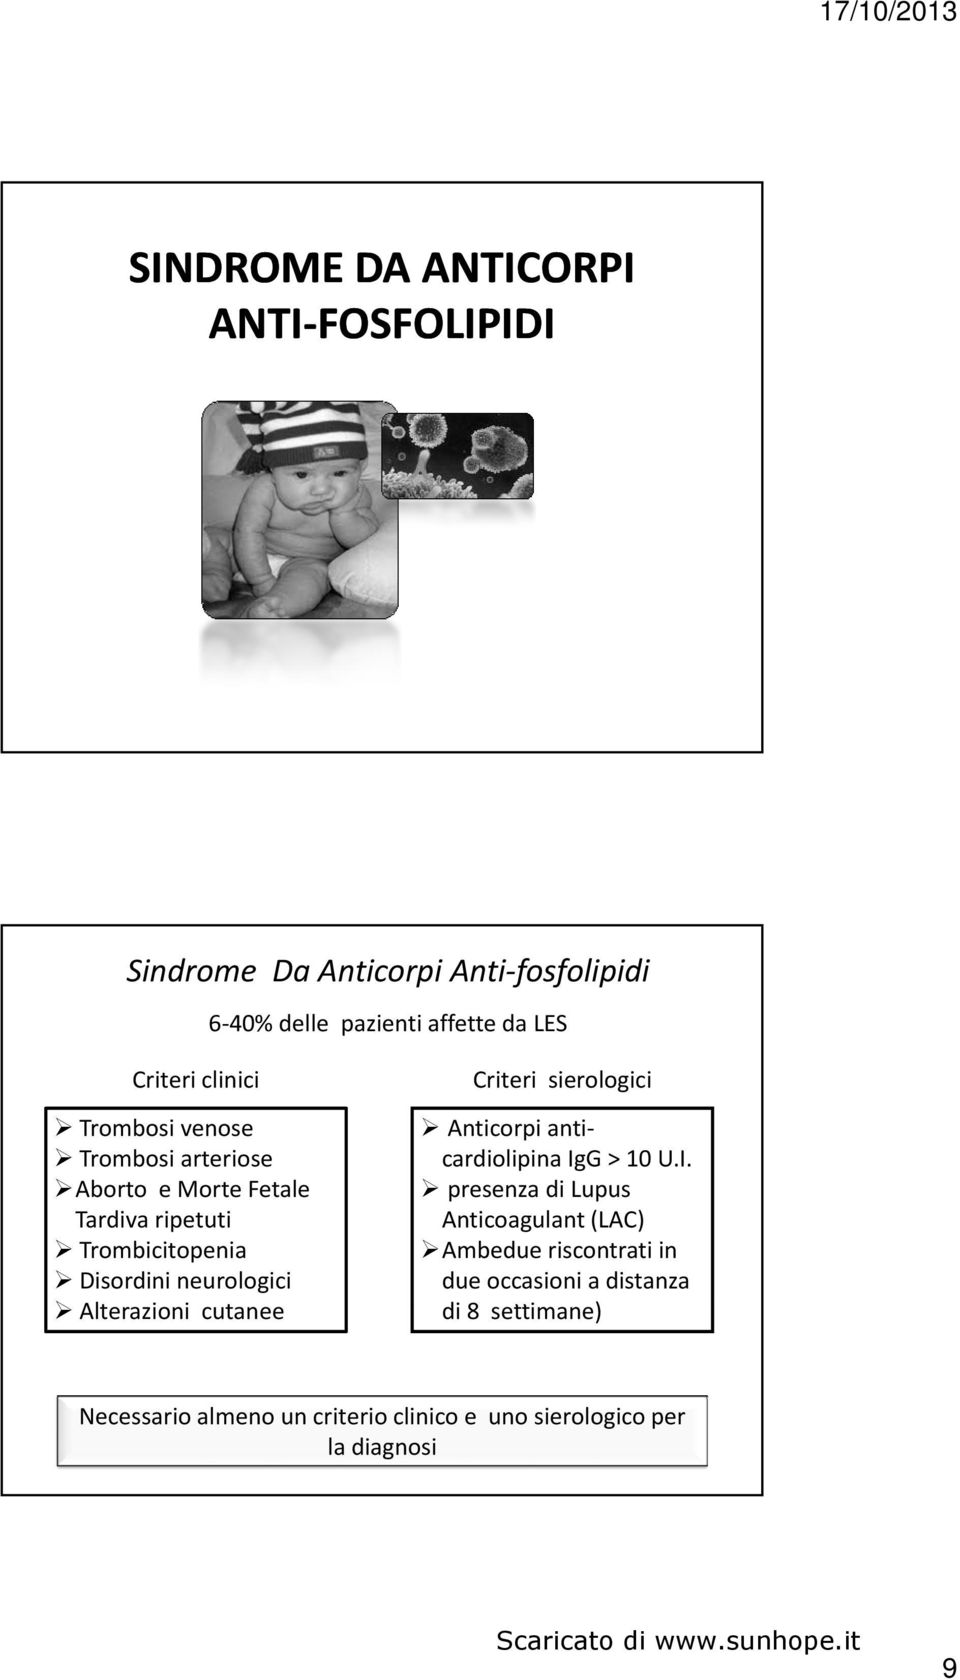 Alterazioni i cutanee Criteri sierologici Anticorpi anticardiolipina Ig